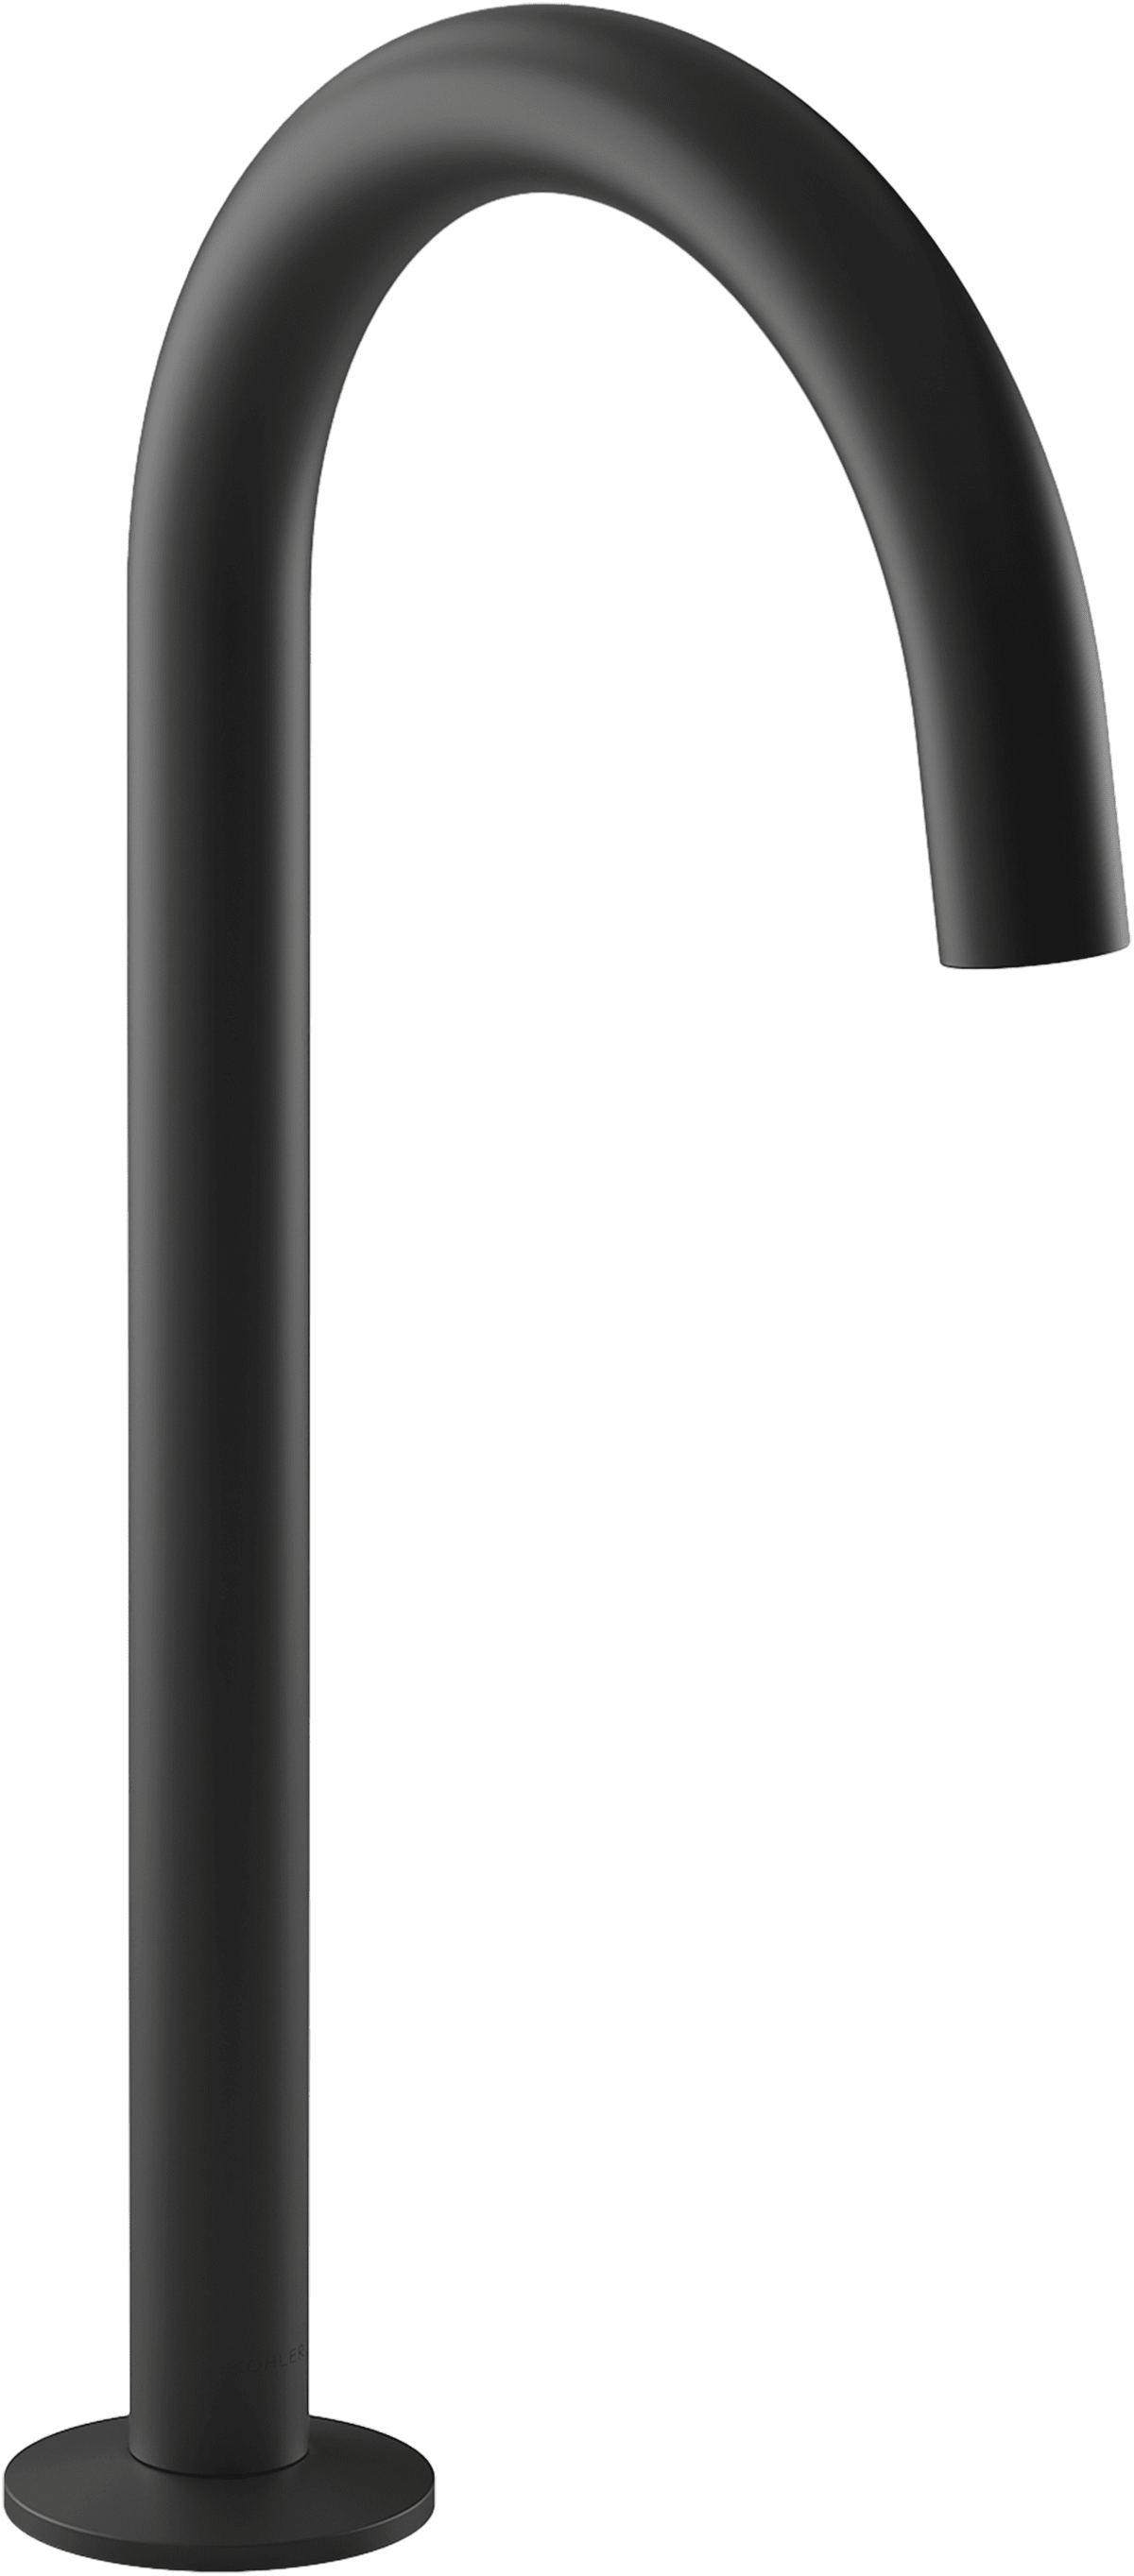 Kohler K 77965 Bl Matte Black Components 1 2 Gpm Tube Spout Vessel